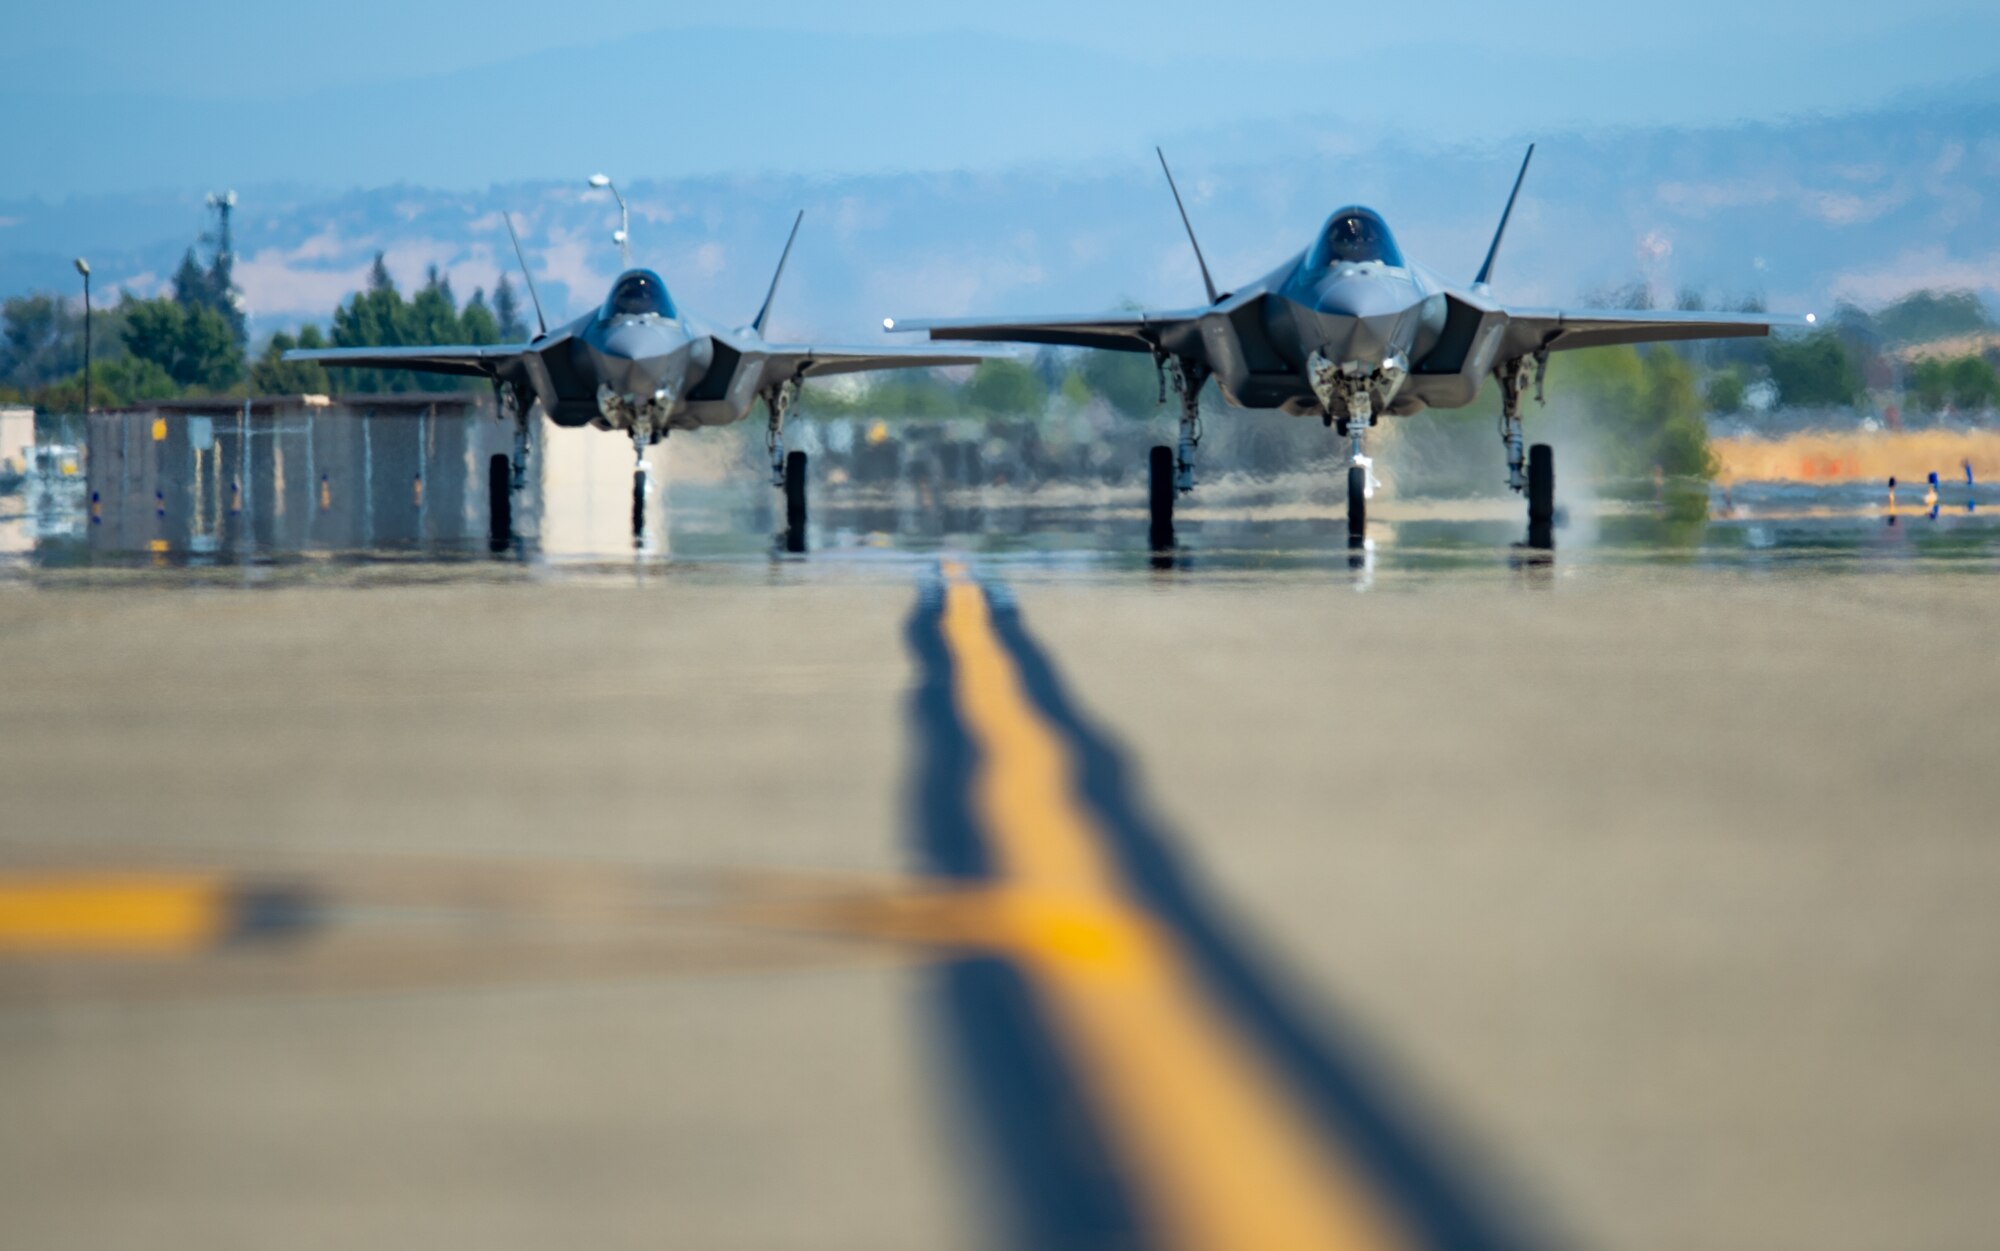 California Capital Air Show > Luke Air Force Base > Article Display